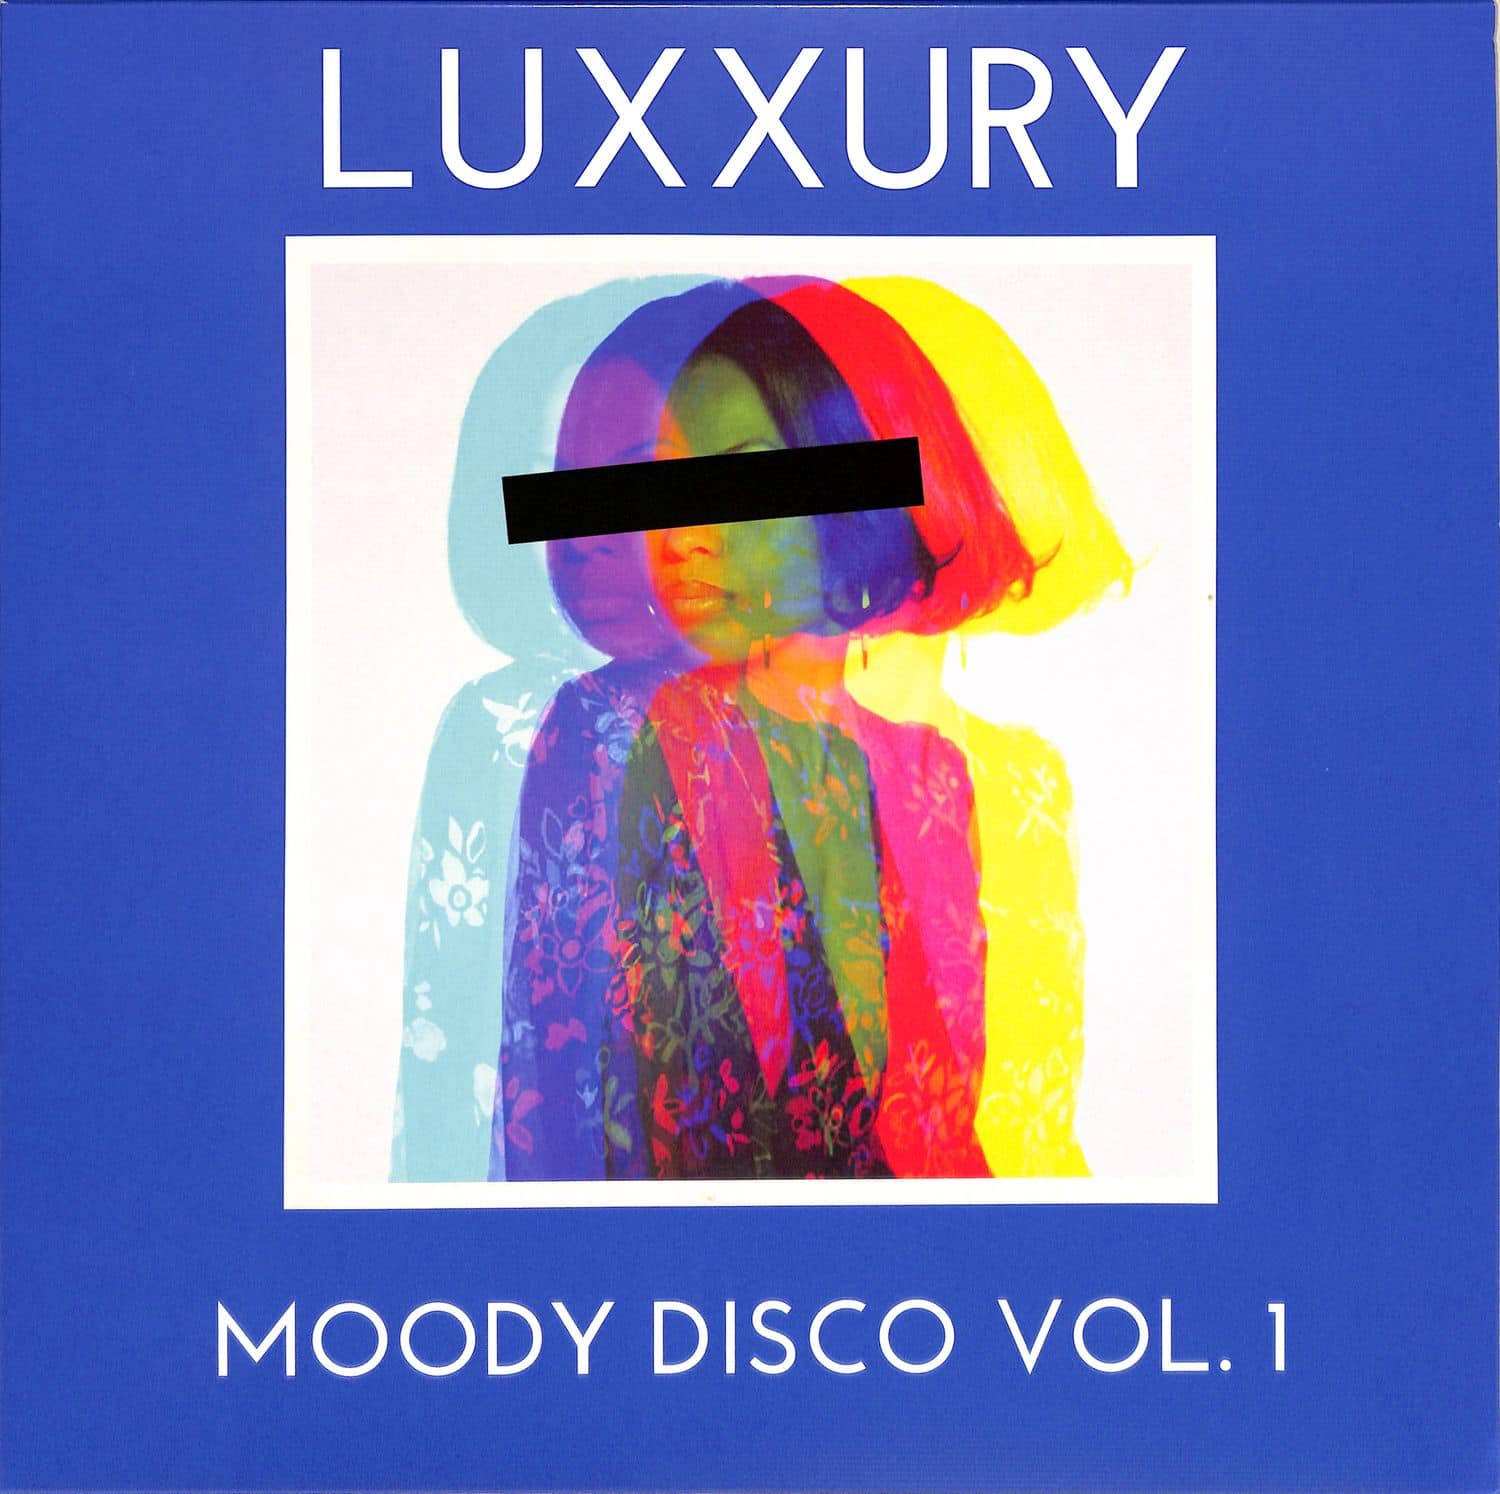 Luxxury - MOODY DISCO VOL. 1